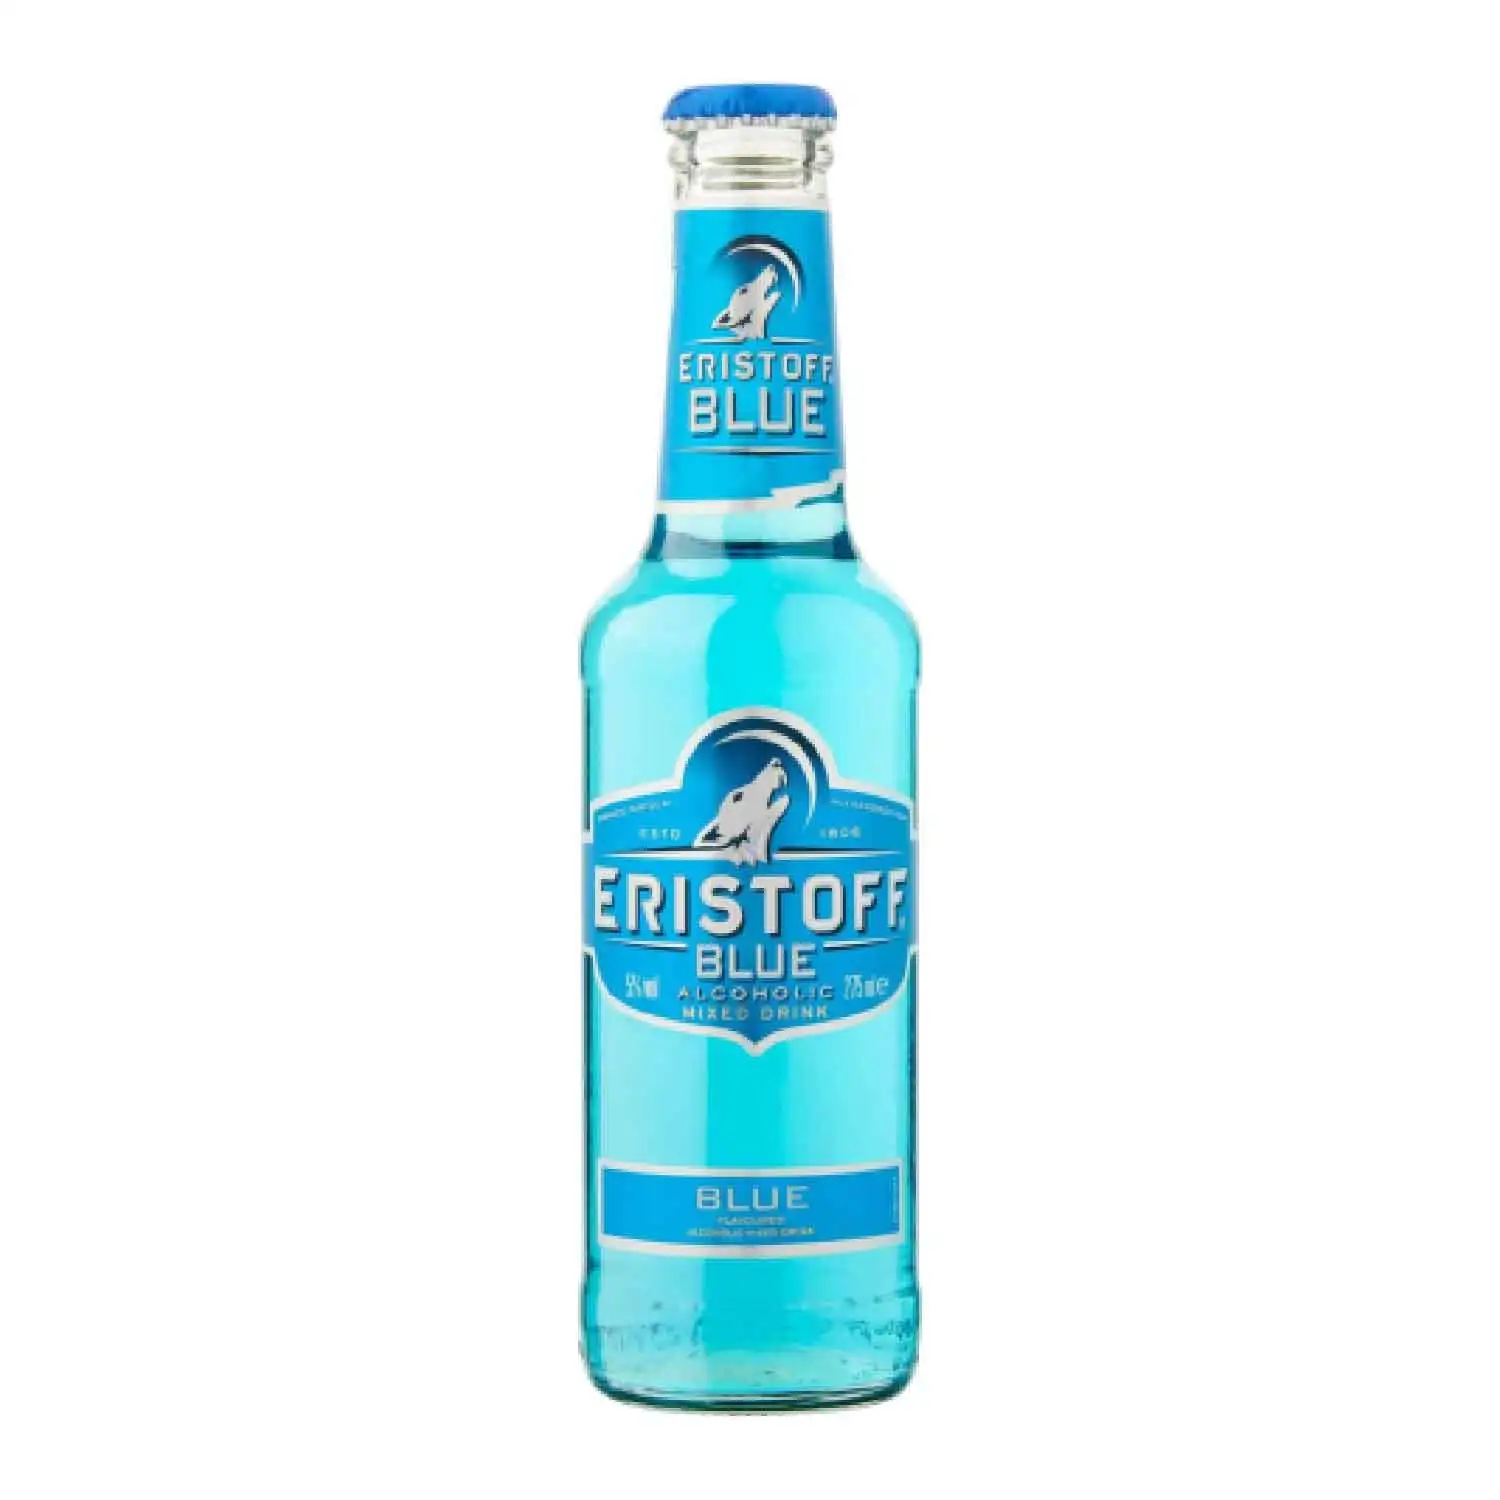 Eristoff bleu 27,5cl Alc 4% - Buy at Real Tobacco